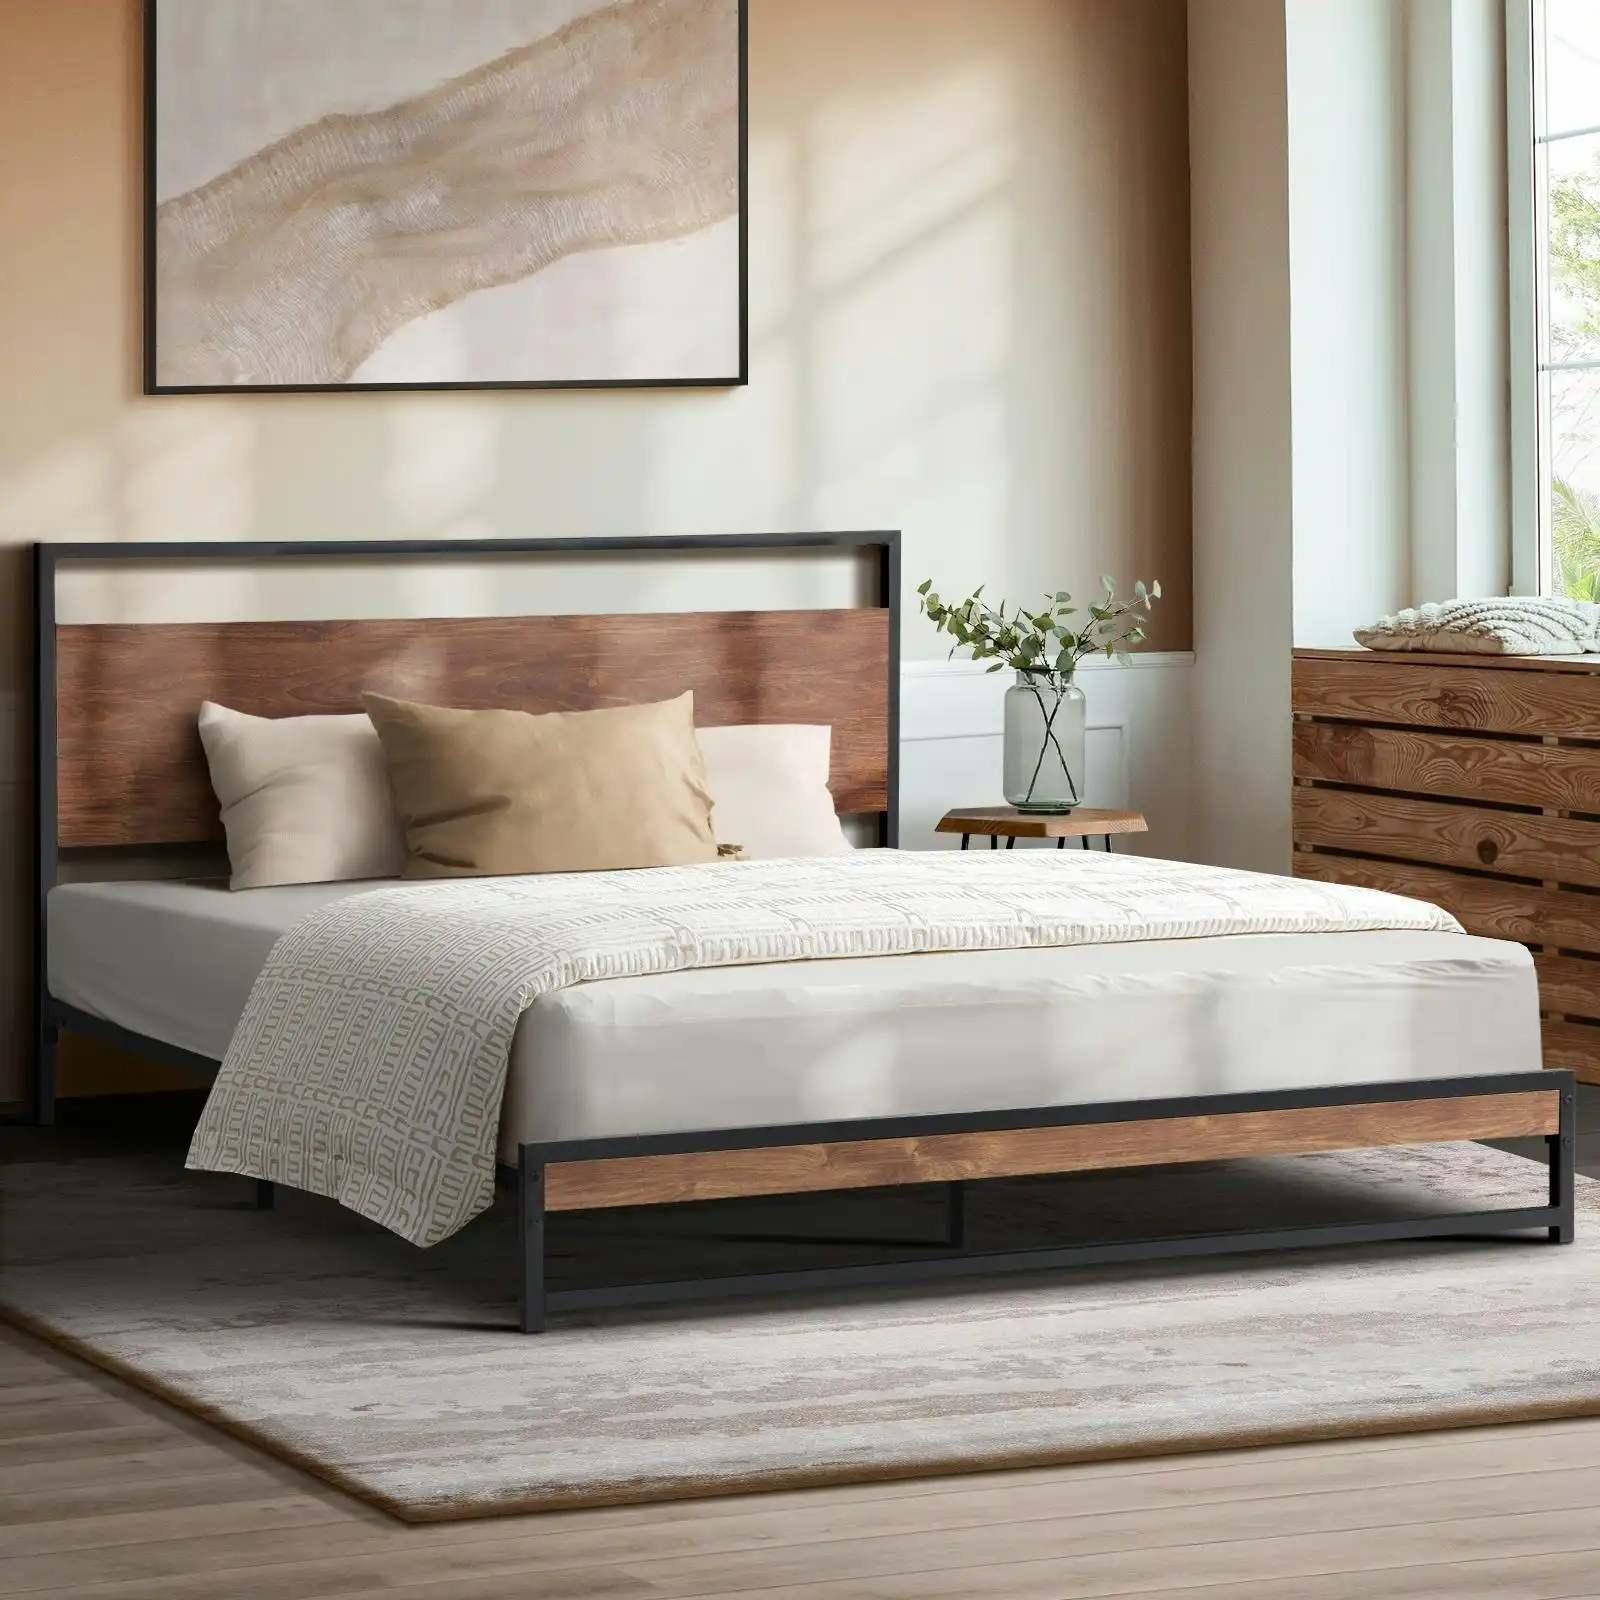 Oikiture Metal Bed Frame Double Size Beds Base Platform Wood